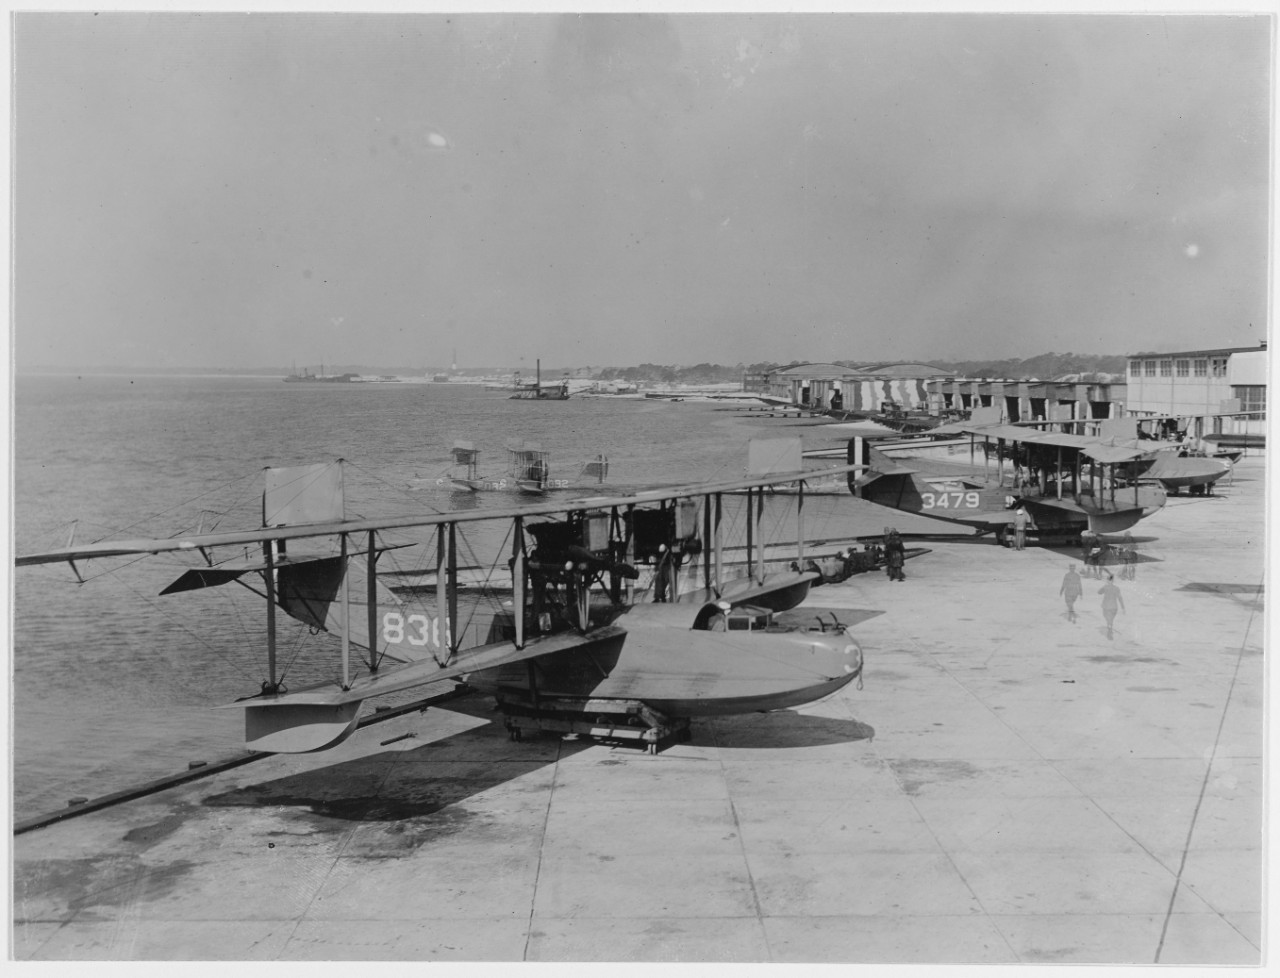 Seaplanes at Naval Air Station Pensacola, Florida